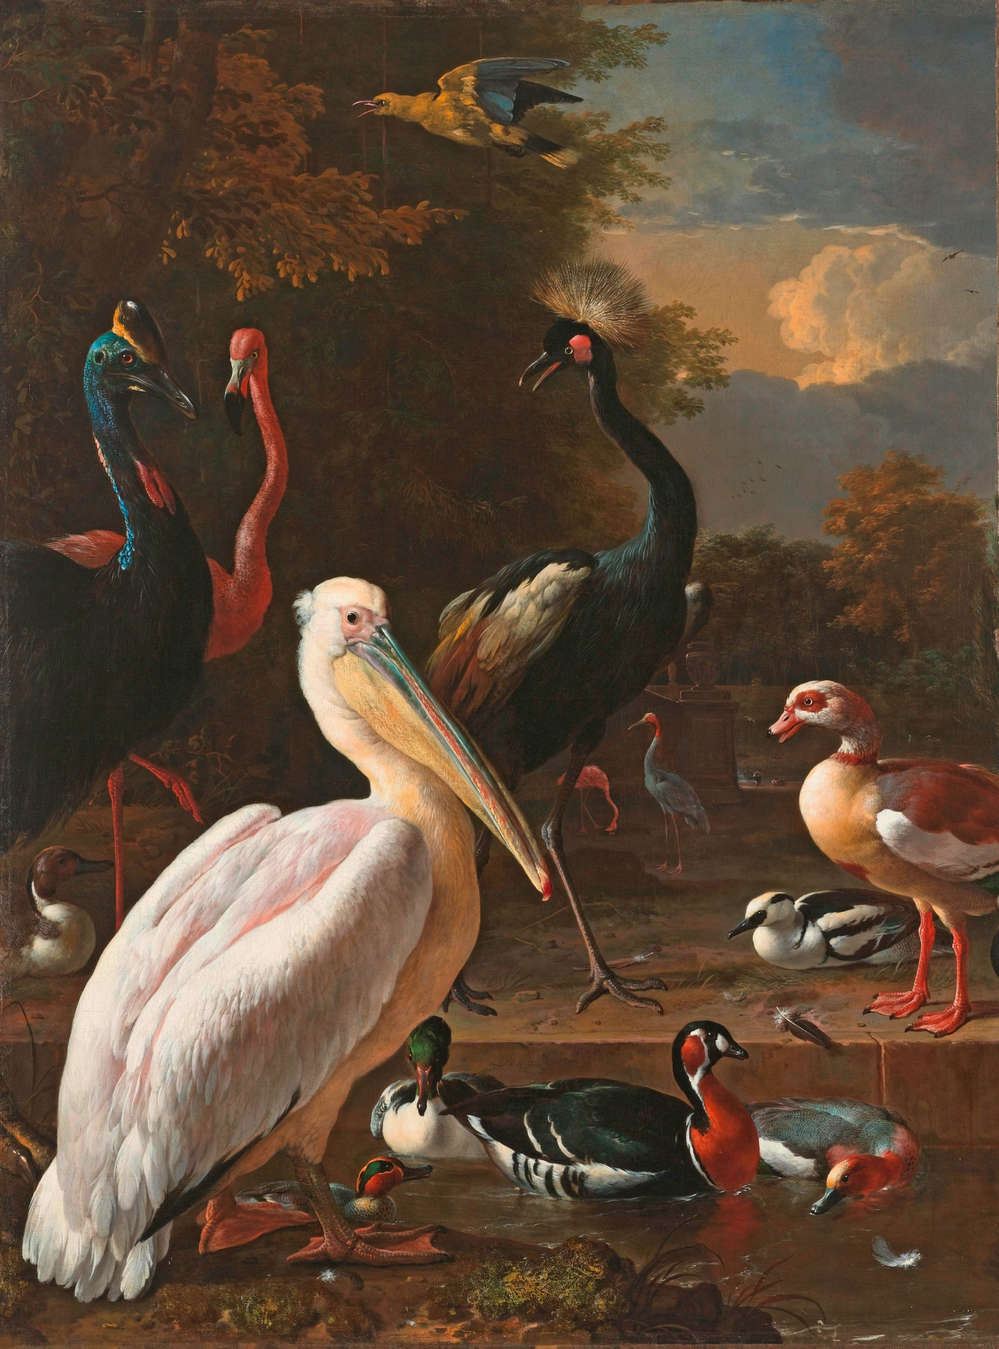             Carta da parati in stile arte antica, Uccelli e animali selvatici - Colorata, marrone, verde
        